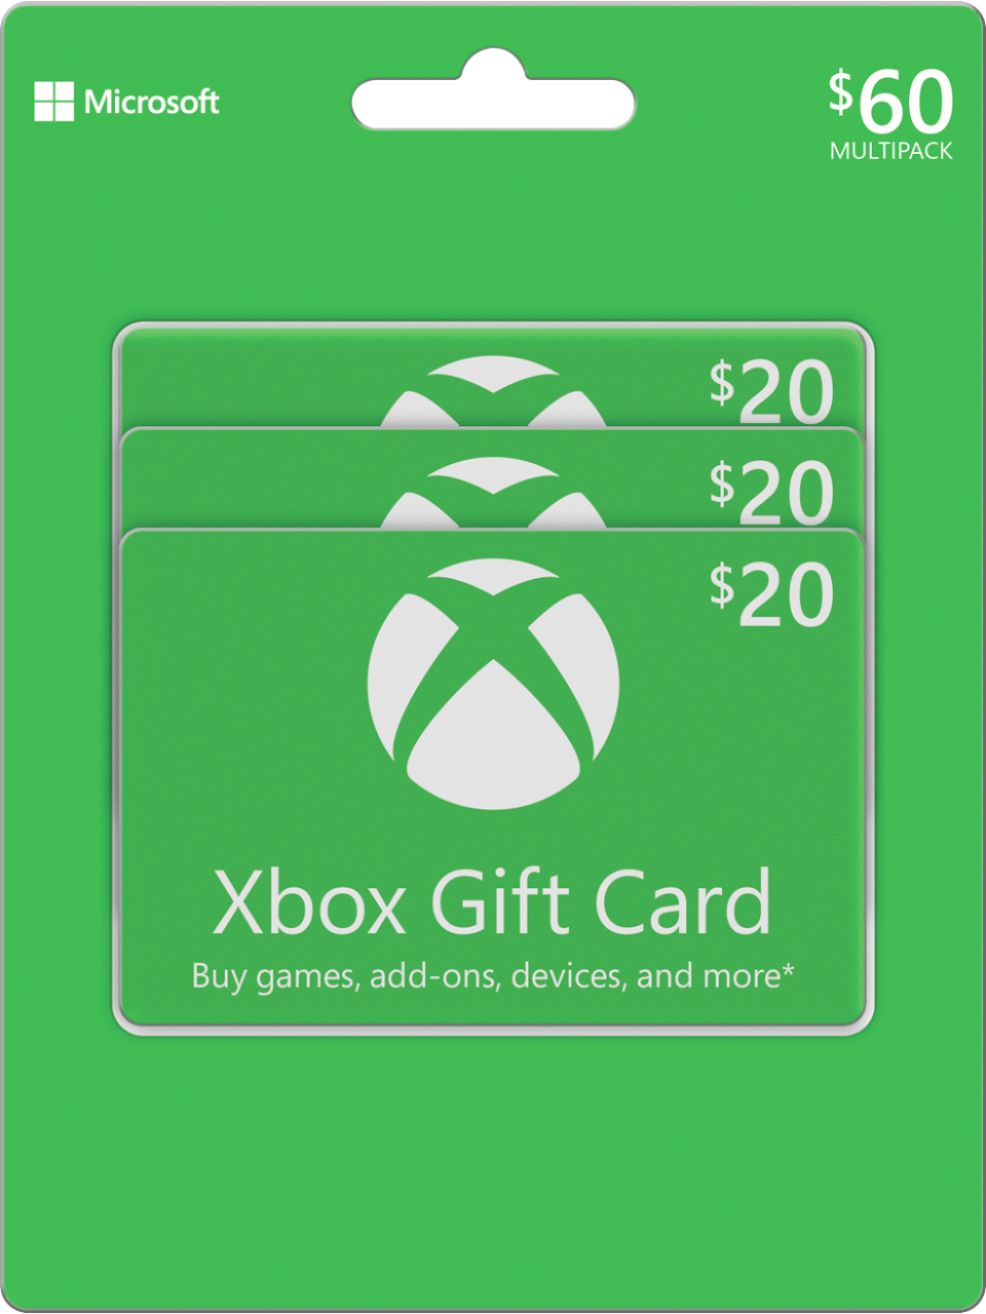 aardolie trek de wol over de ogen hek Microsoft $20 Xbox Gift Card (3-Pack) MICROSOFT XBOX MP $60 (3 X $20 - Best  Buy